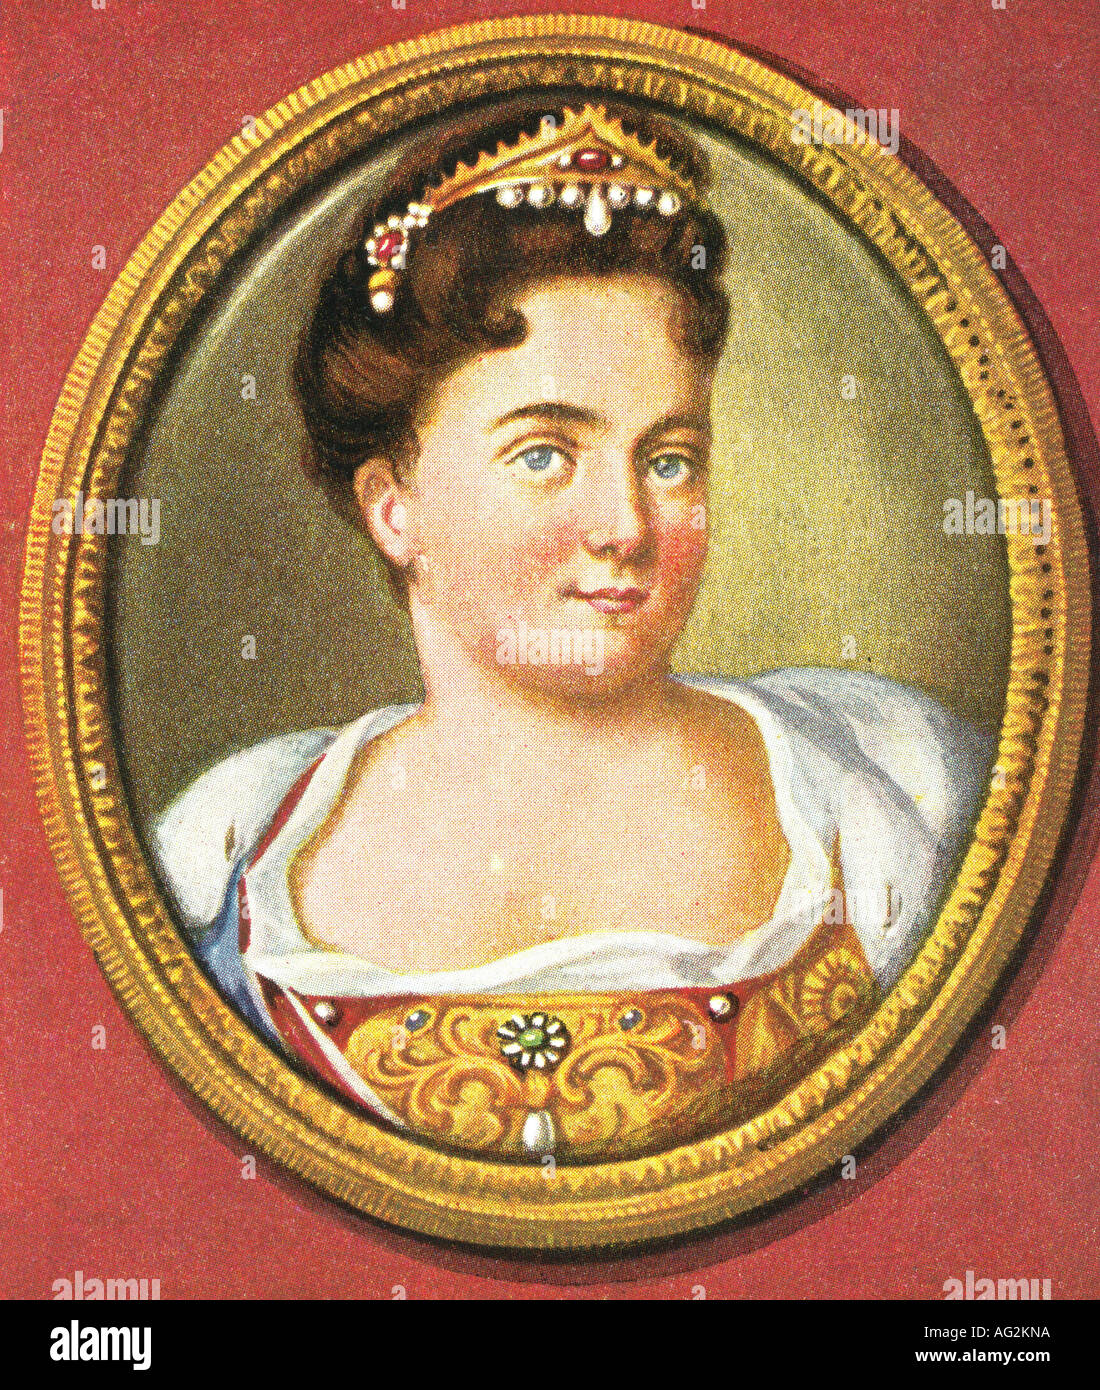 Catherine I. Alexeyevna, 15.4.1684 - 6.5.1727, Empress of Russia 25.1.1725 - 6.5.1727, portrait, print after miniature, 18th century, Stock Photo